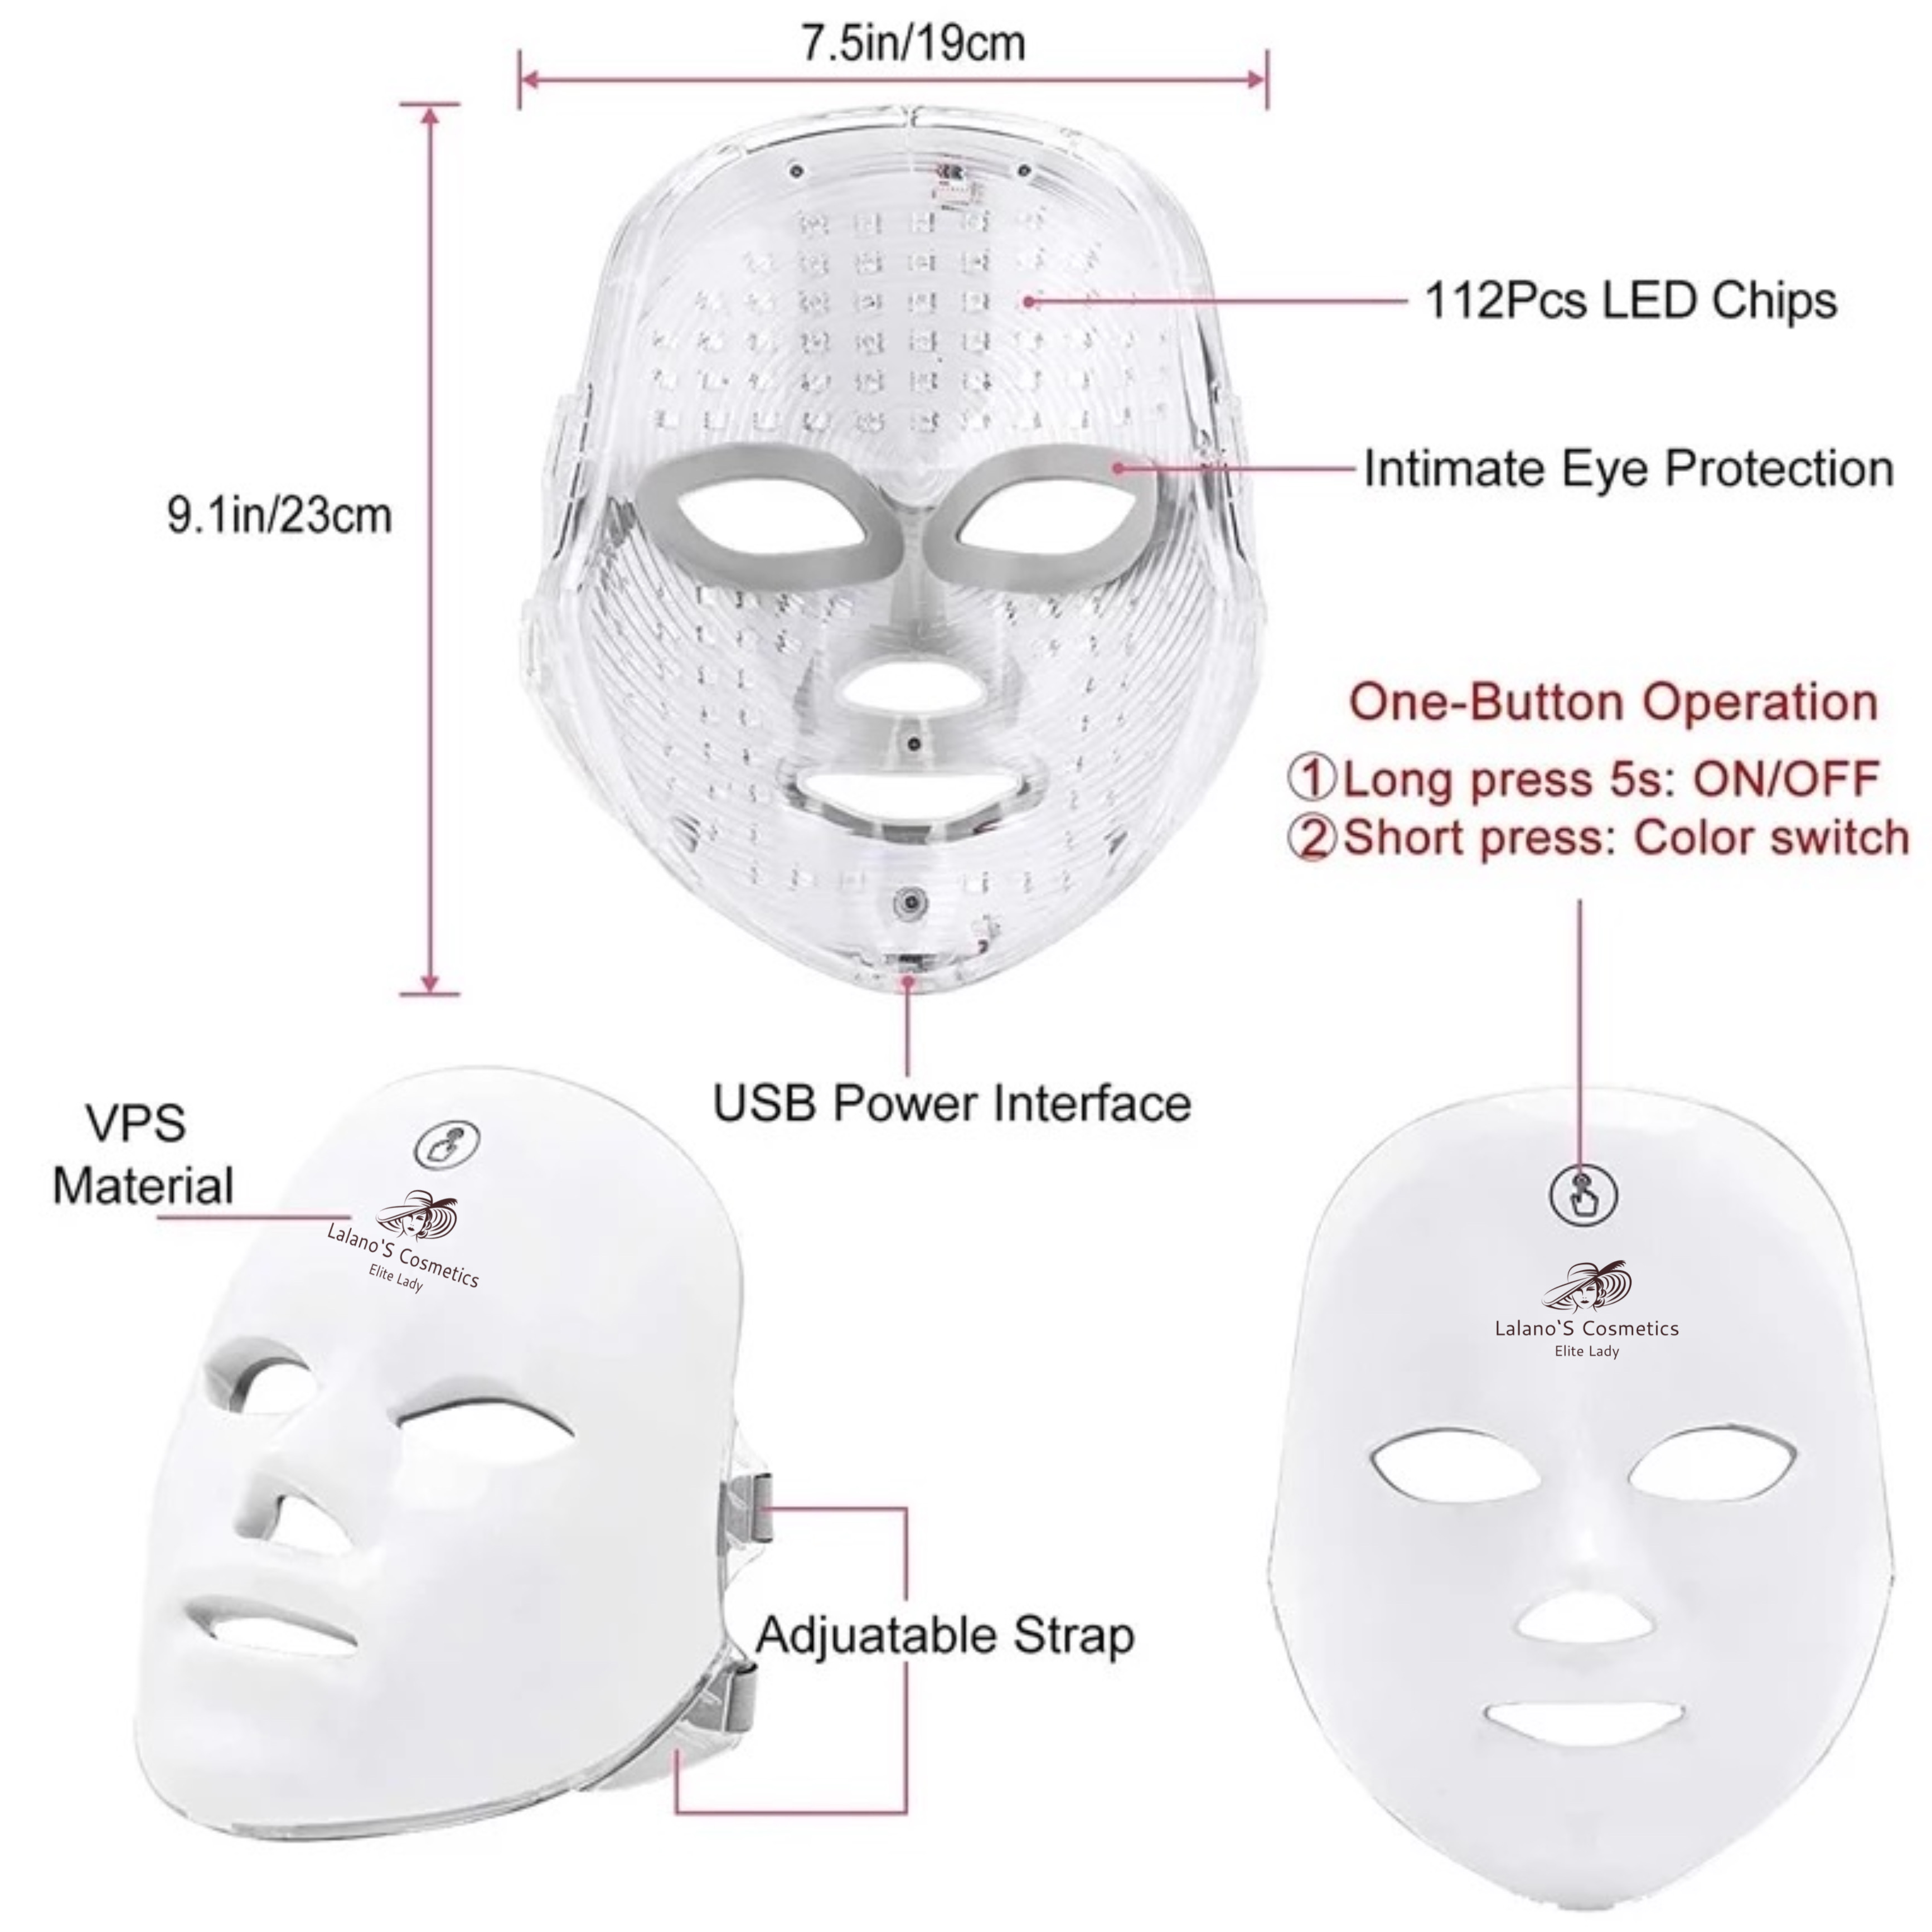 COSMETICS LED Gesichtsmaske LALANOS facial Light Anti-Aging Gesichtspflege